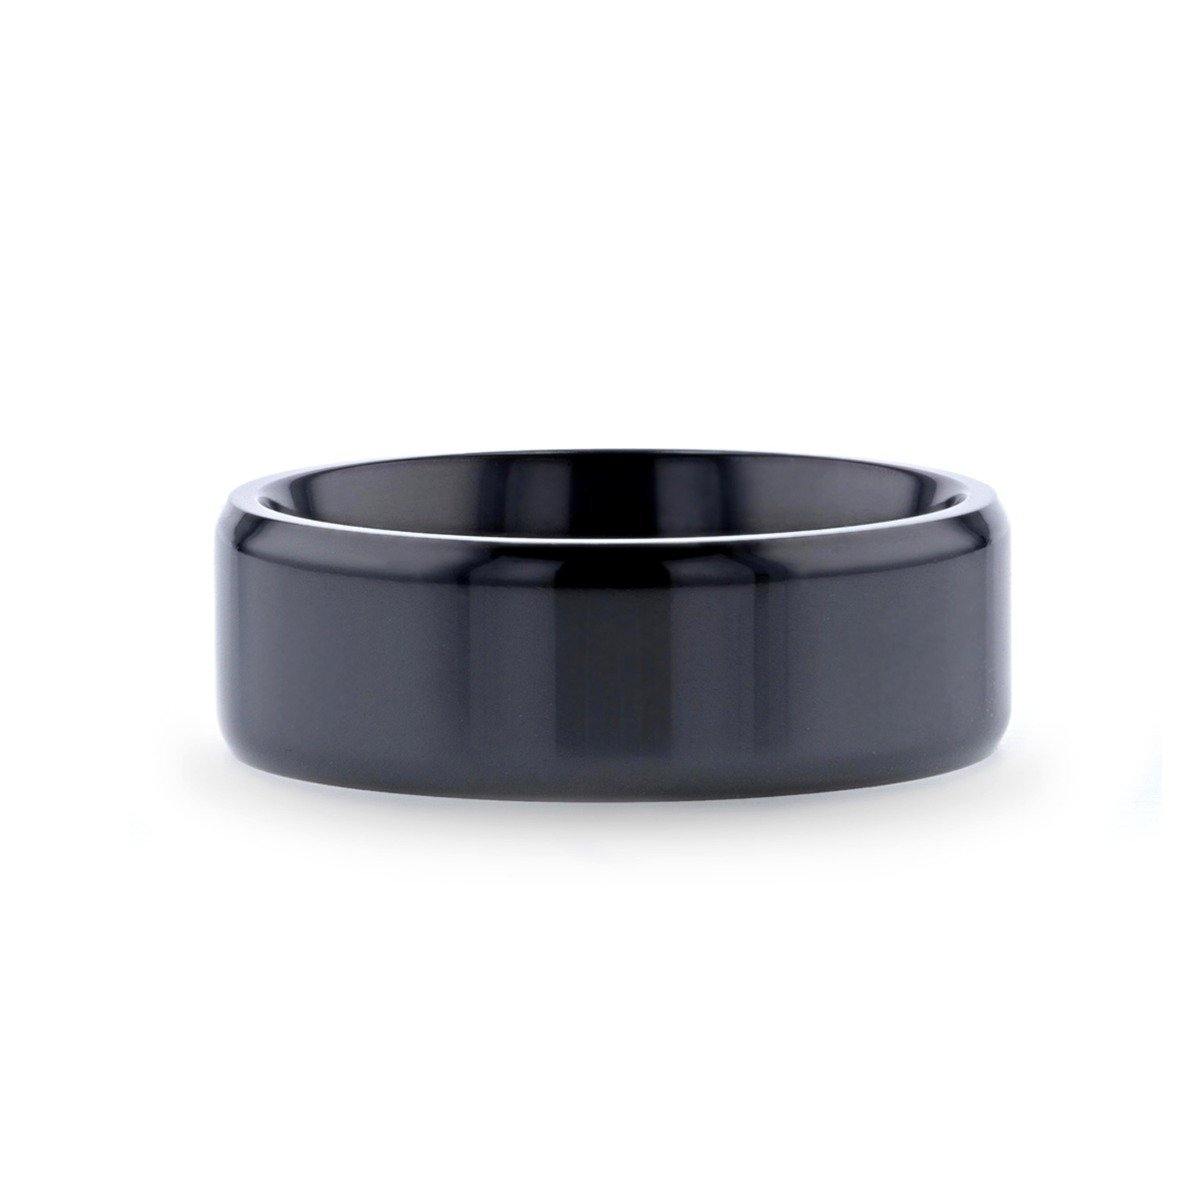 EXODUS - Black Titanium Wedding Ring with Beveled Edges - 8mm - The Rutile Ltd